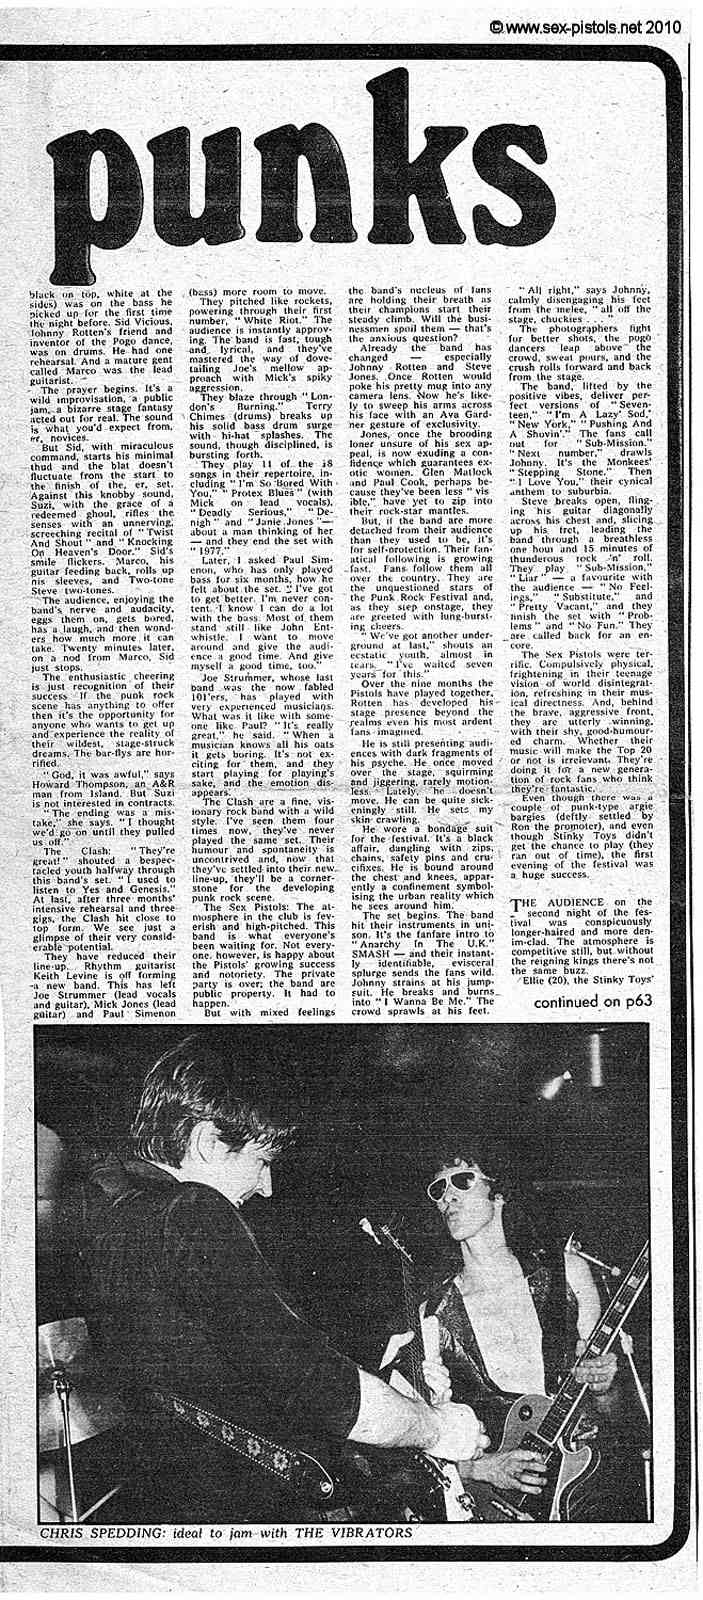 Melody Maker 2nd September 1976